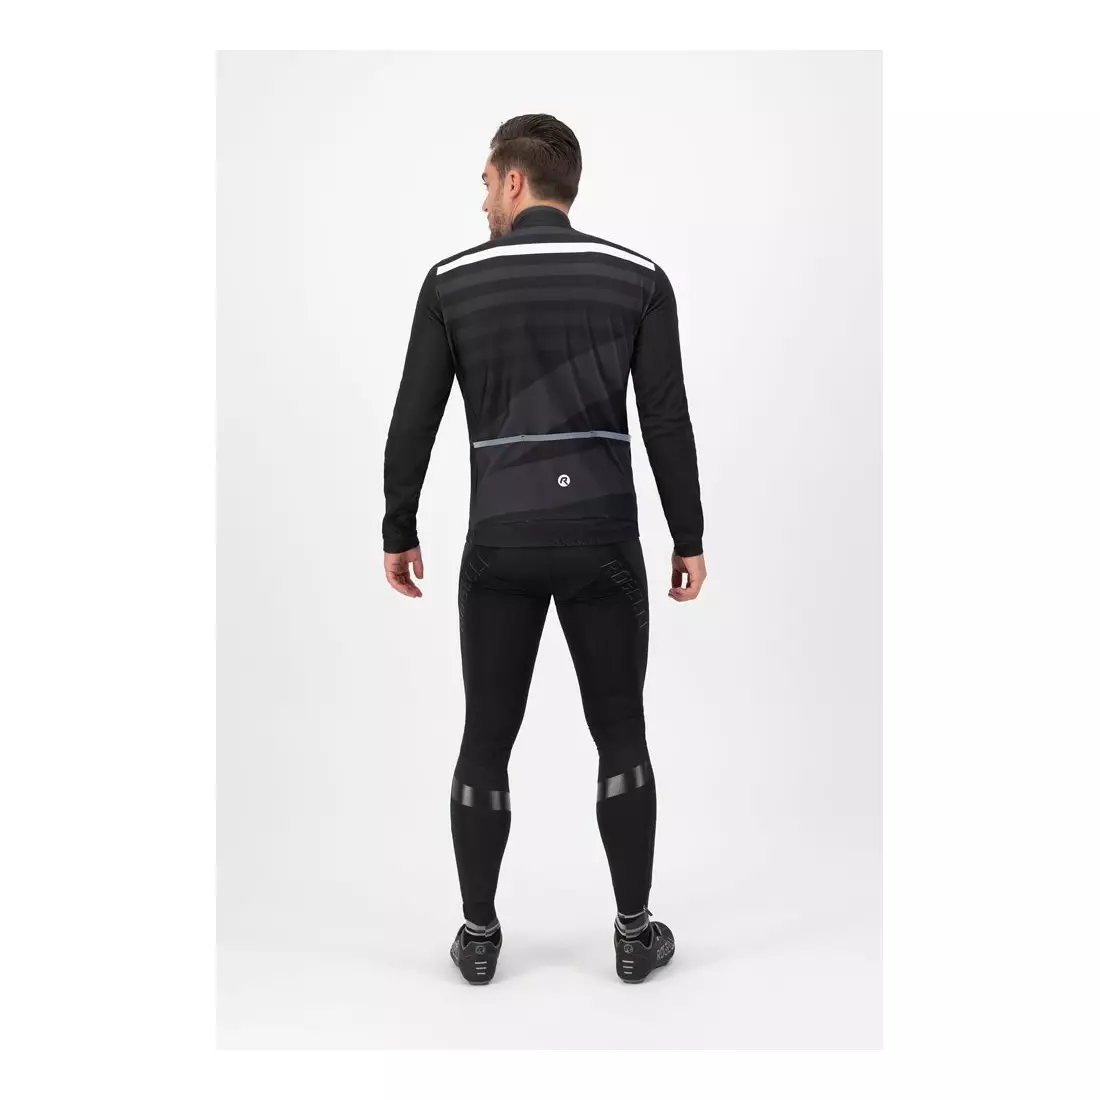 ROGELLI winter cycling jacket STRIPE black ROG351039